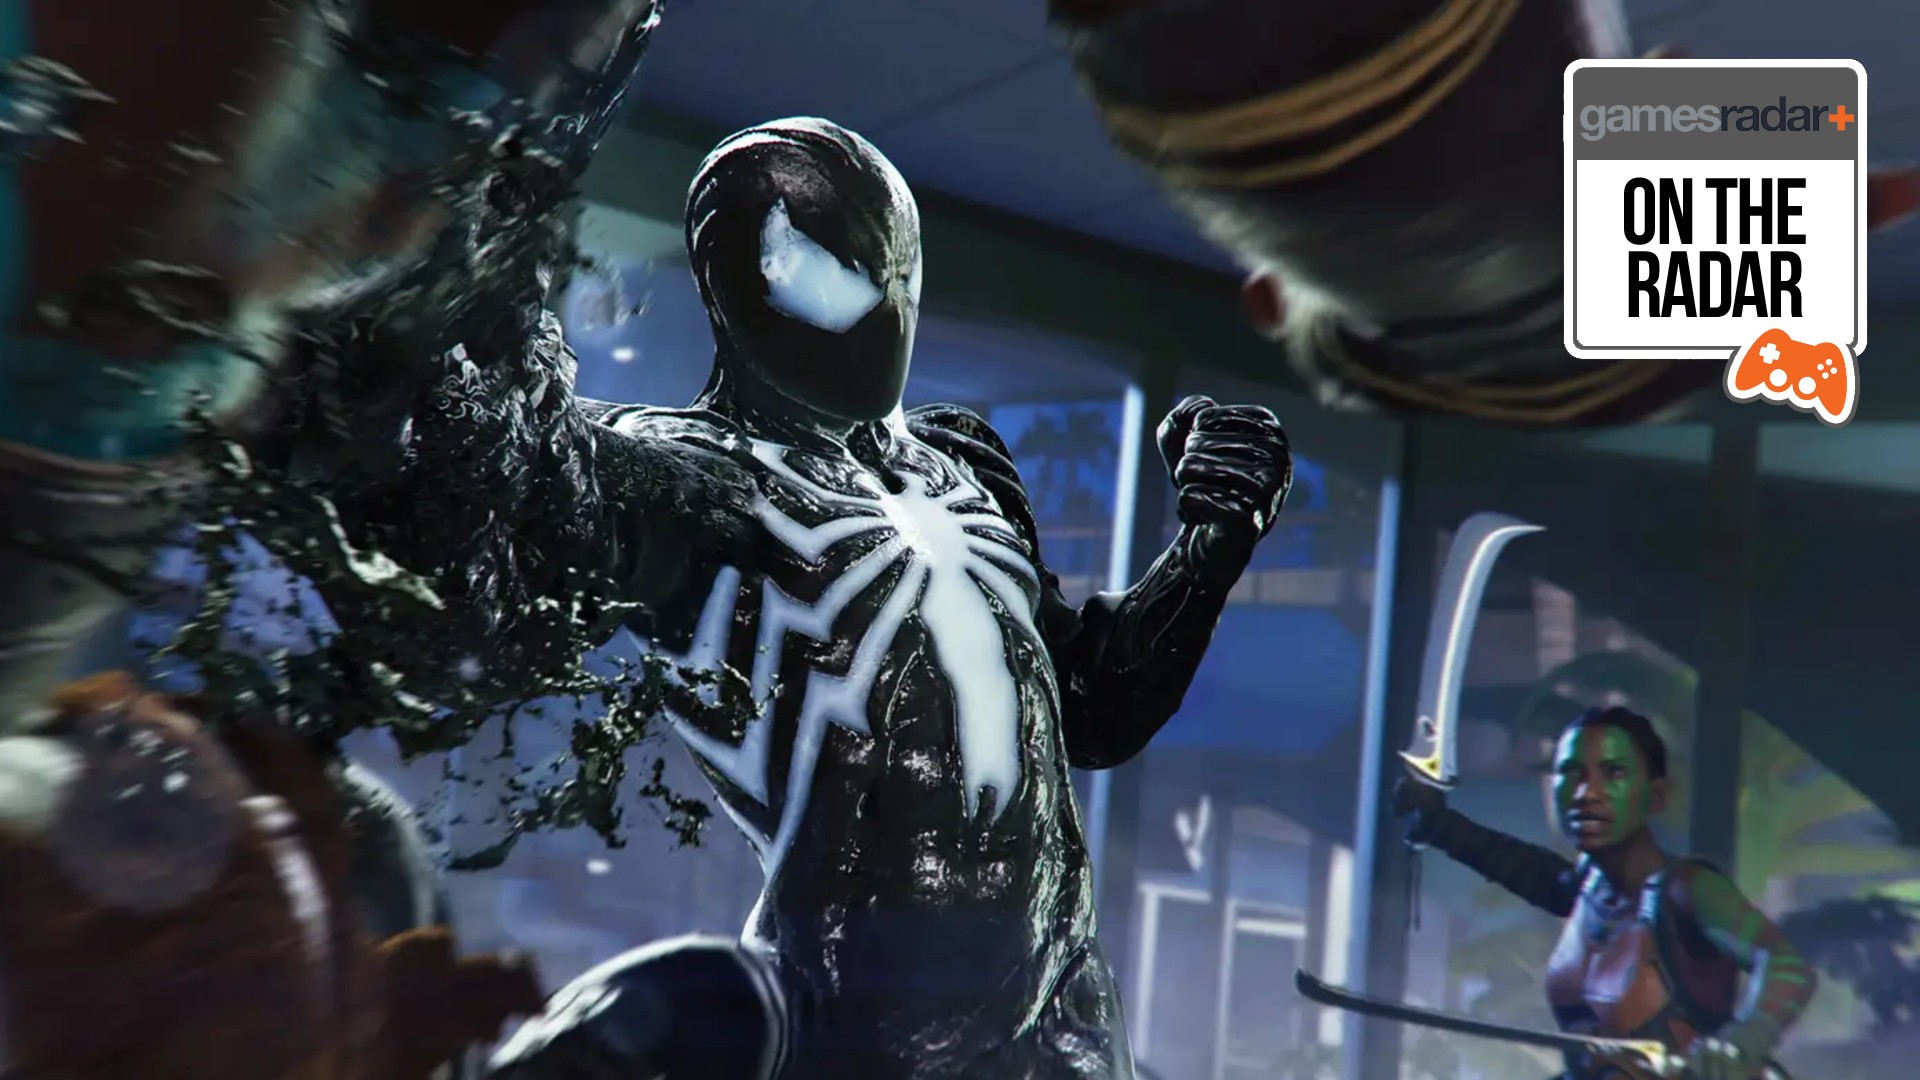 Both Are PEAK” – Marvel's Spider-Man 2 Fans Reveal Their Wild Take